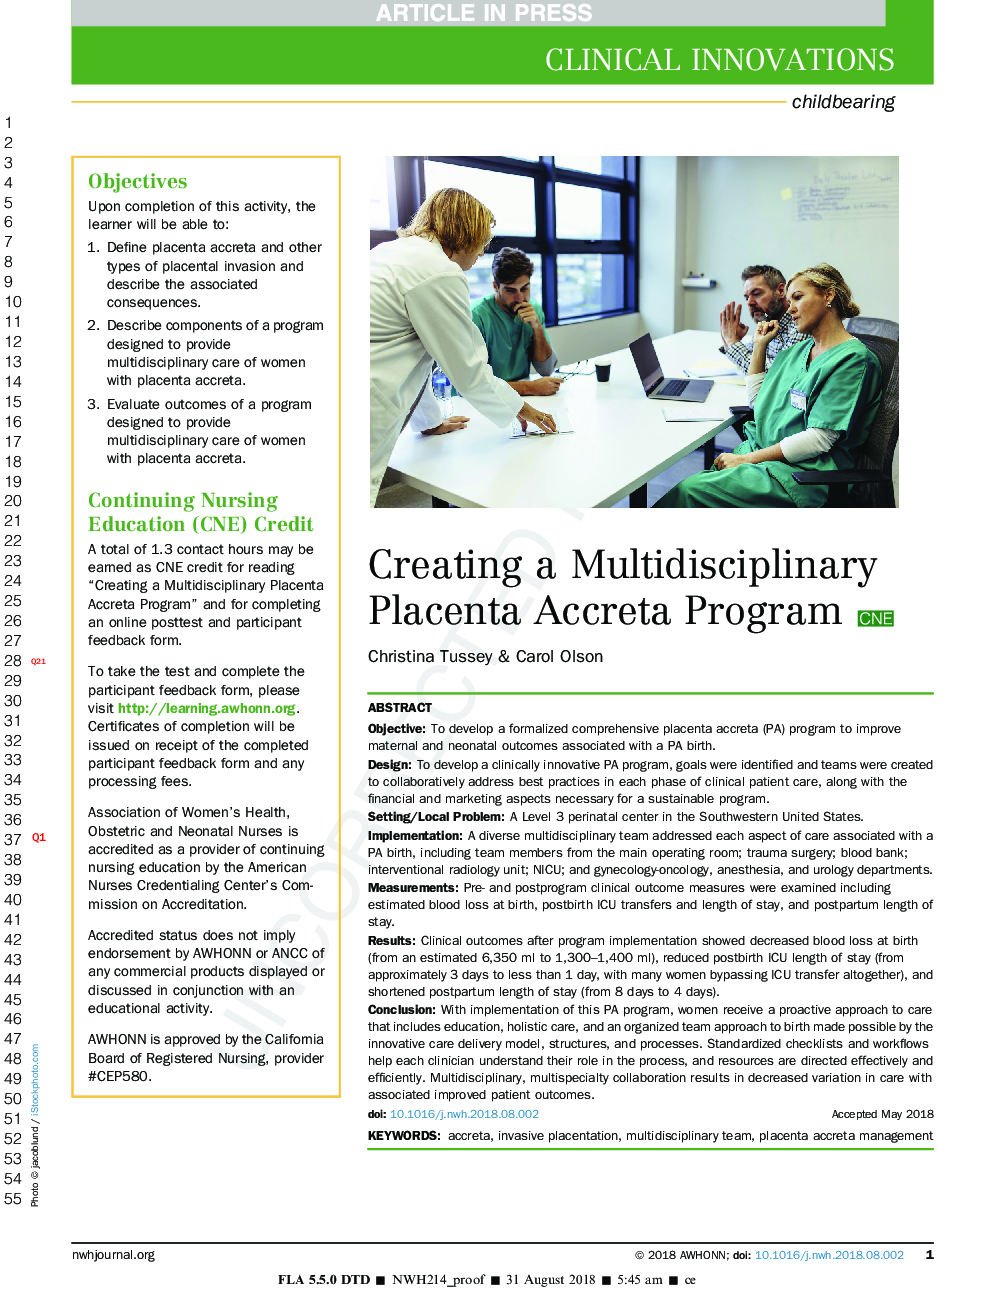 Creating a Multidisciplinary Placenta Accreta Program